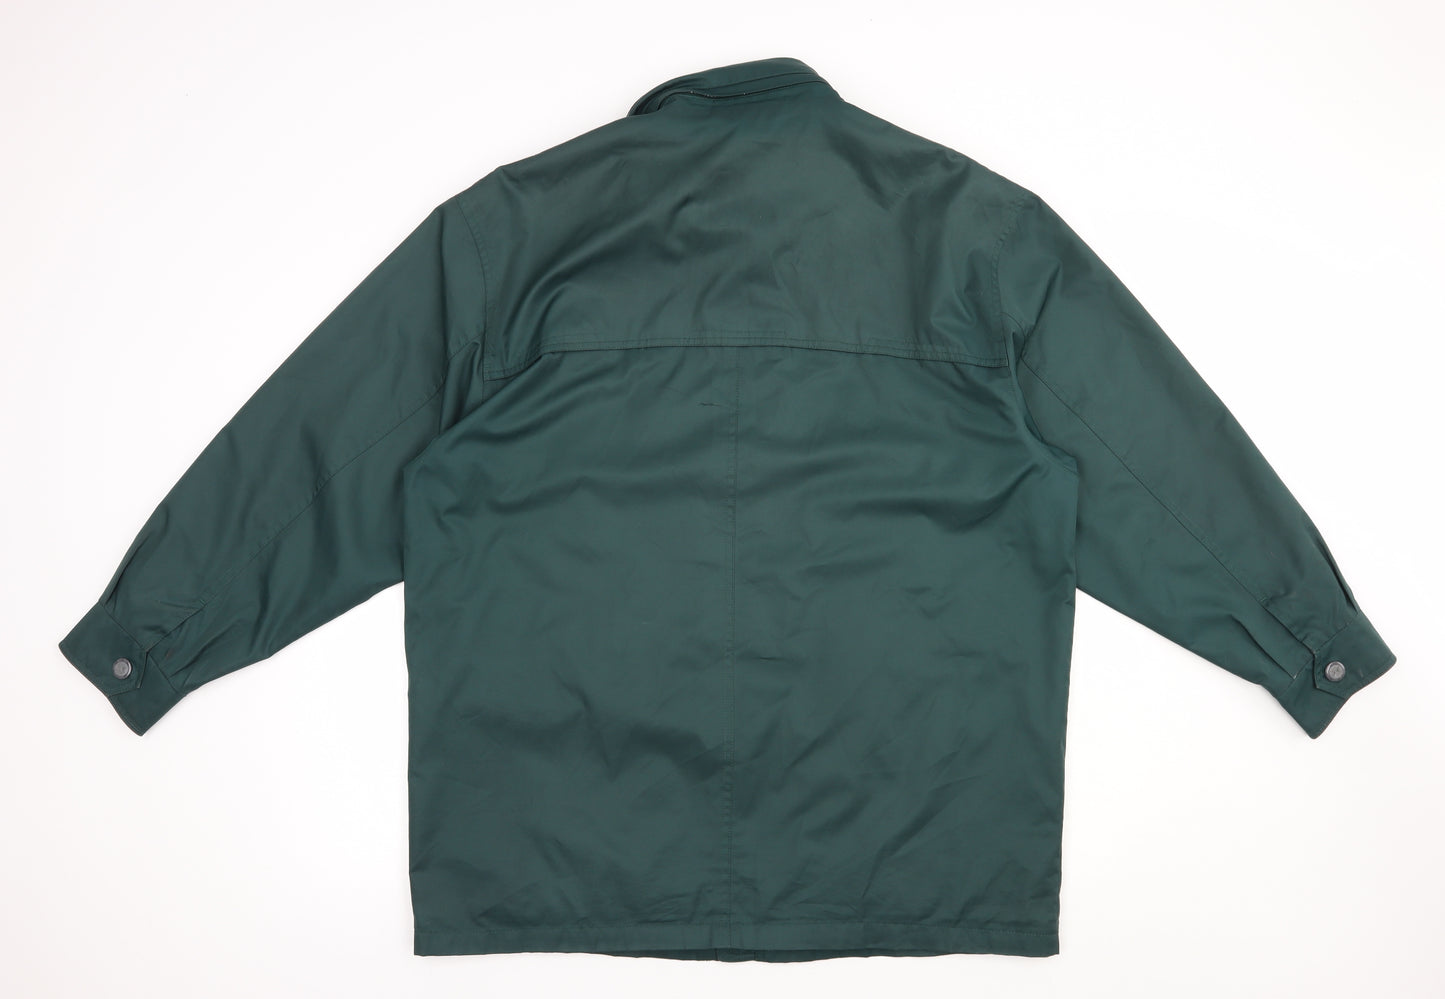 Dannimac Mens Green   Rain Coat Jacket Size M  Zip